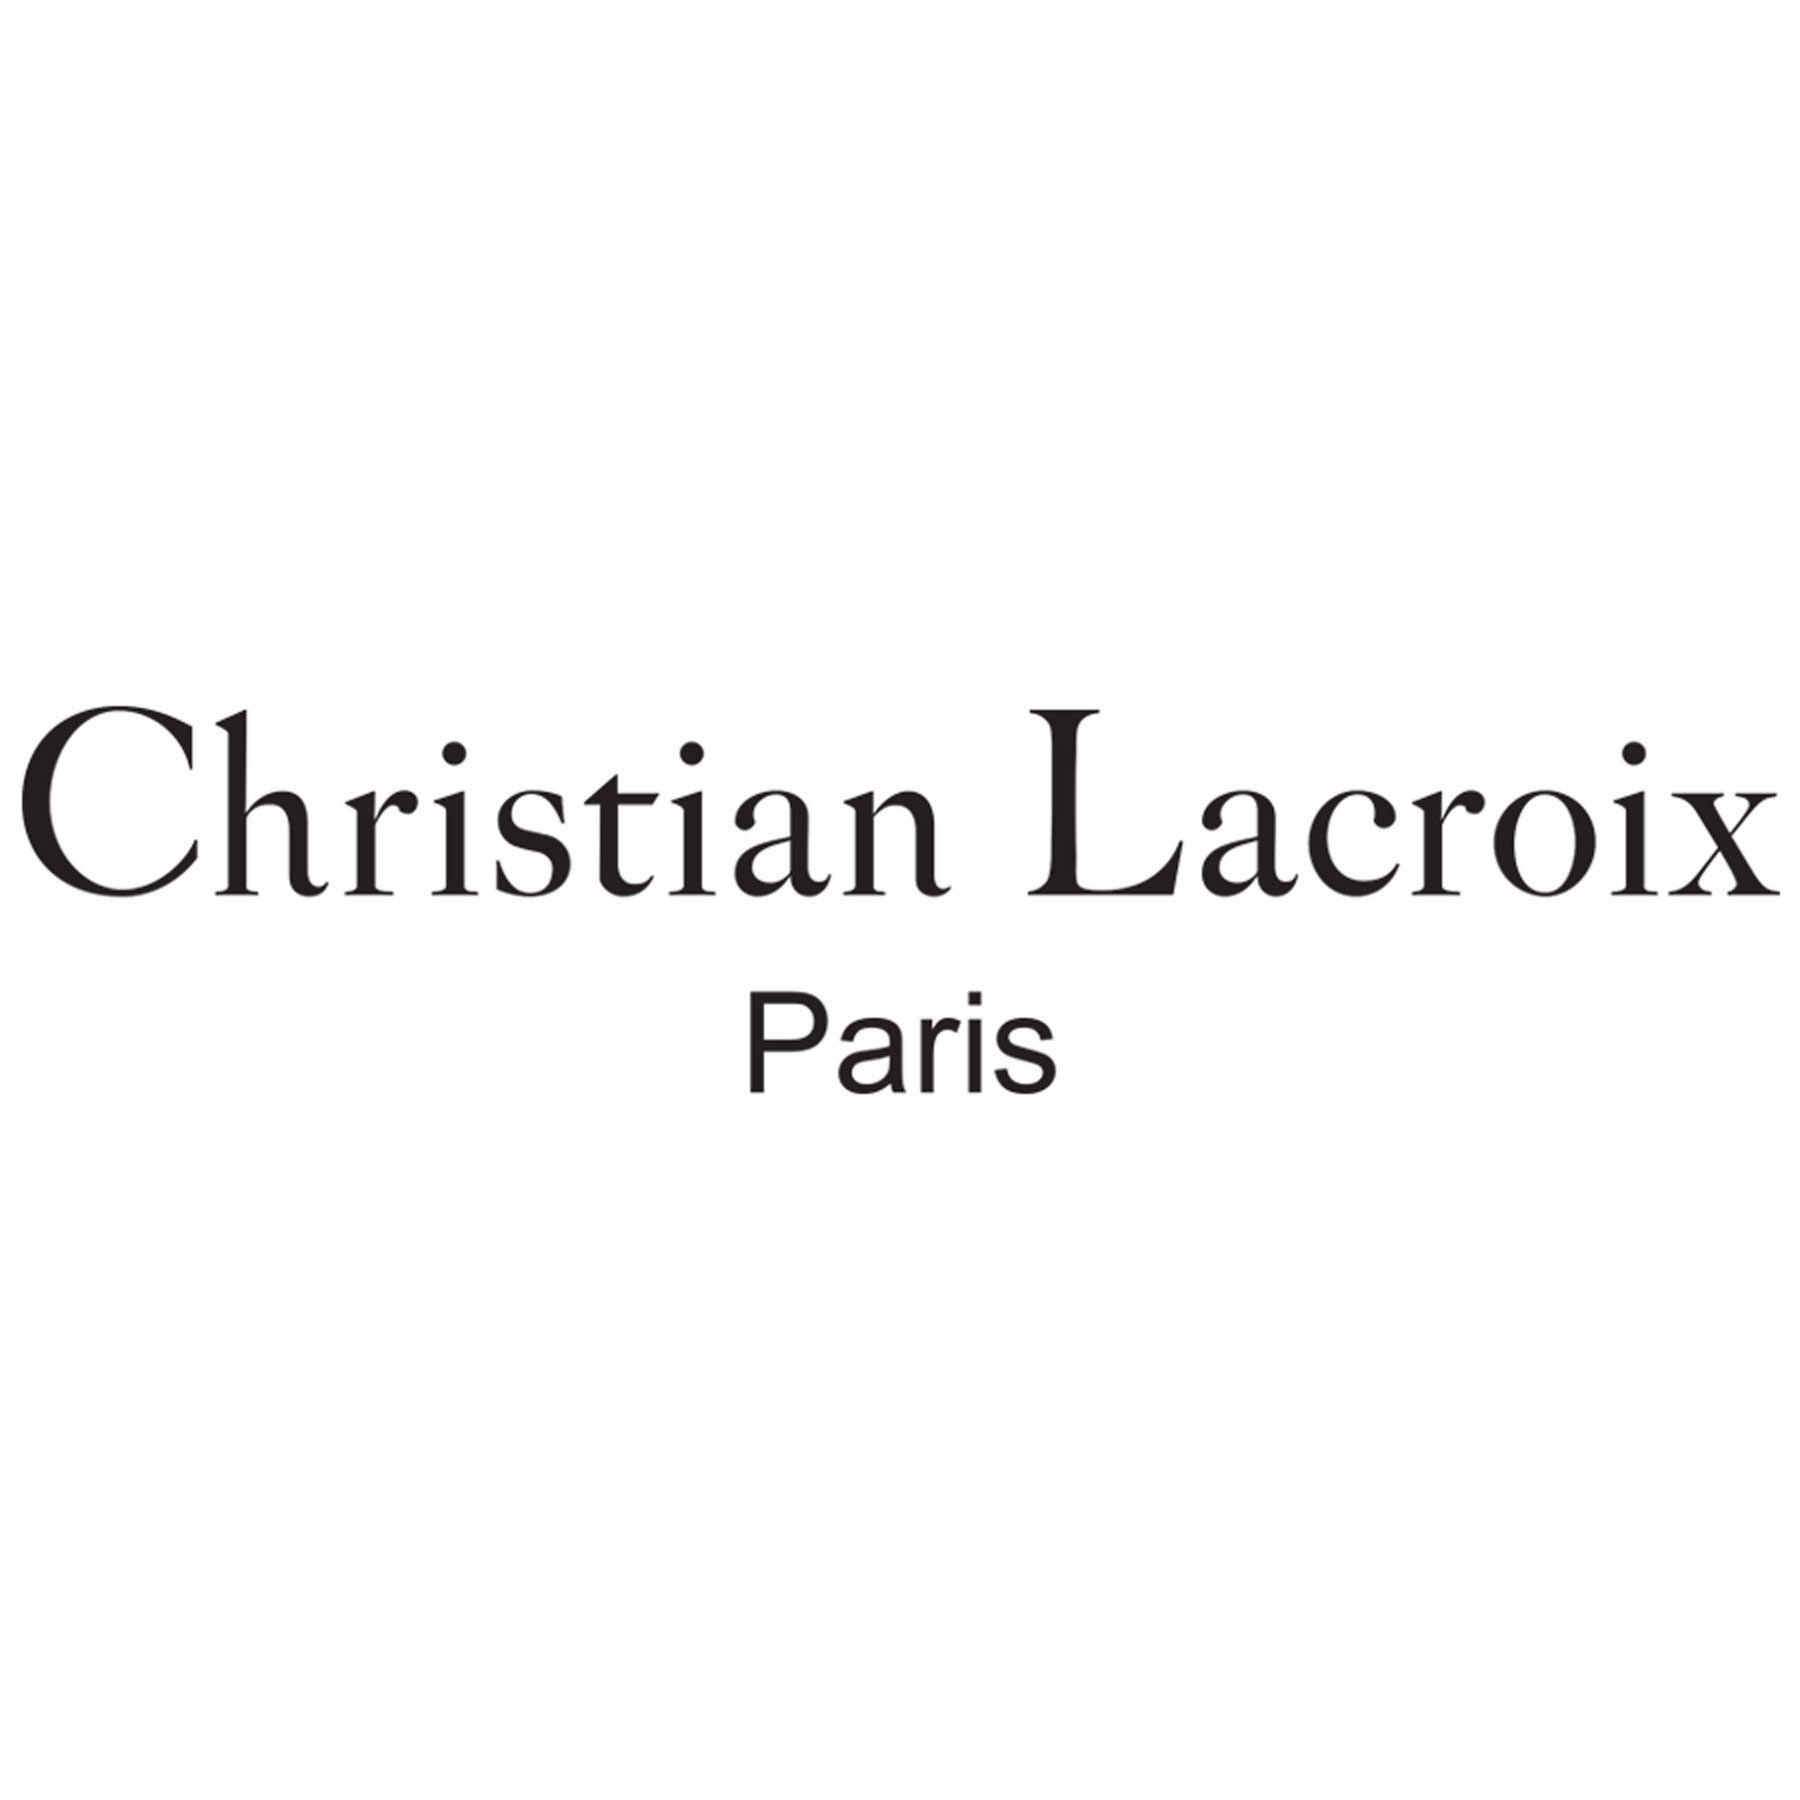 Lacroix Logo - Christian Lacroix Logo - Moooi Carpets